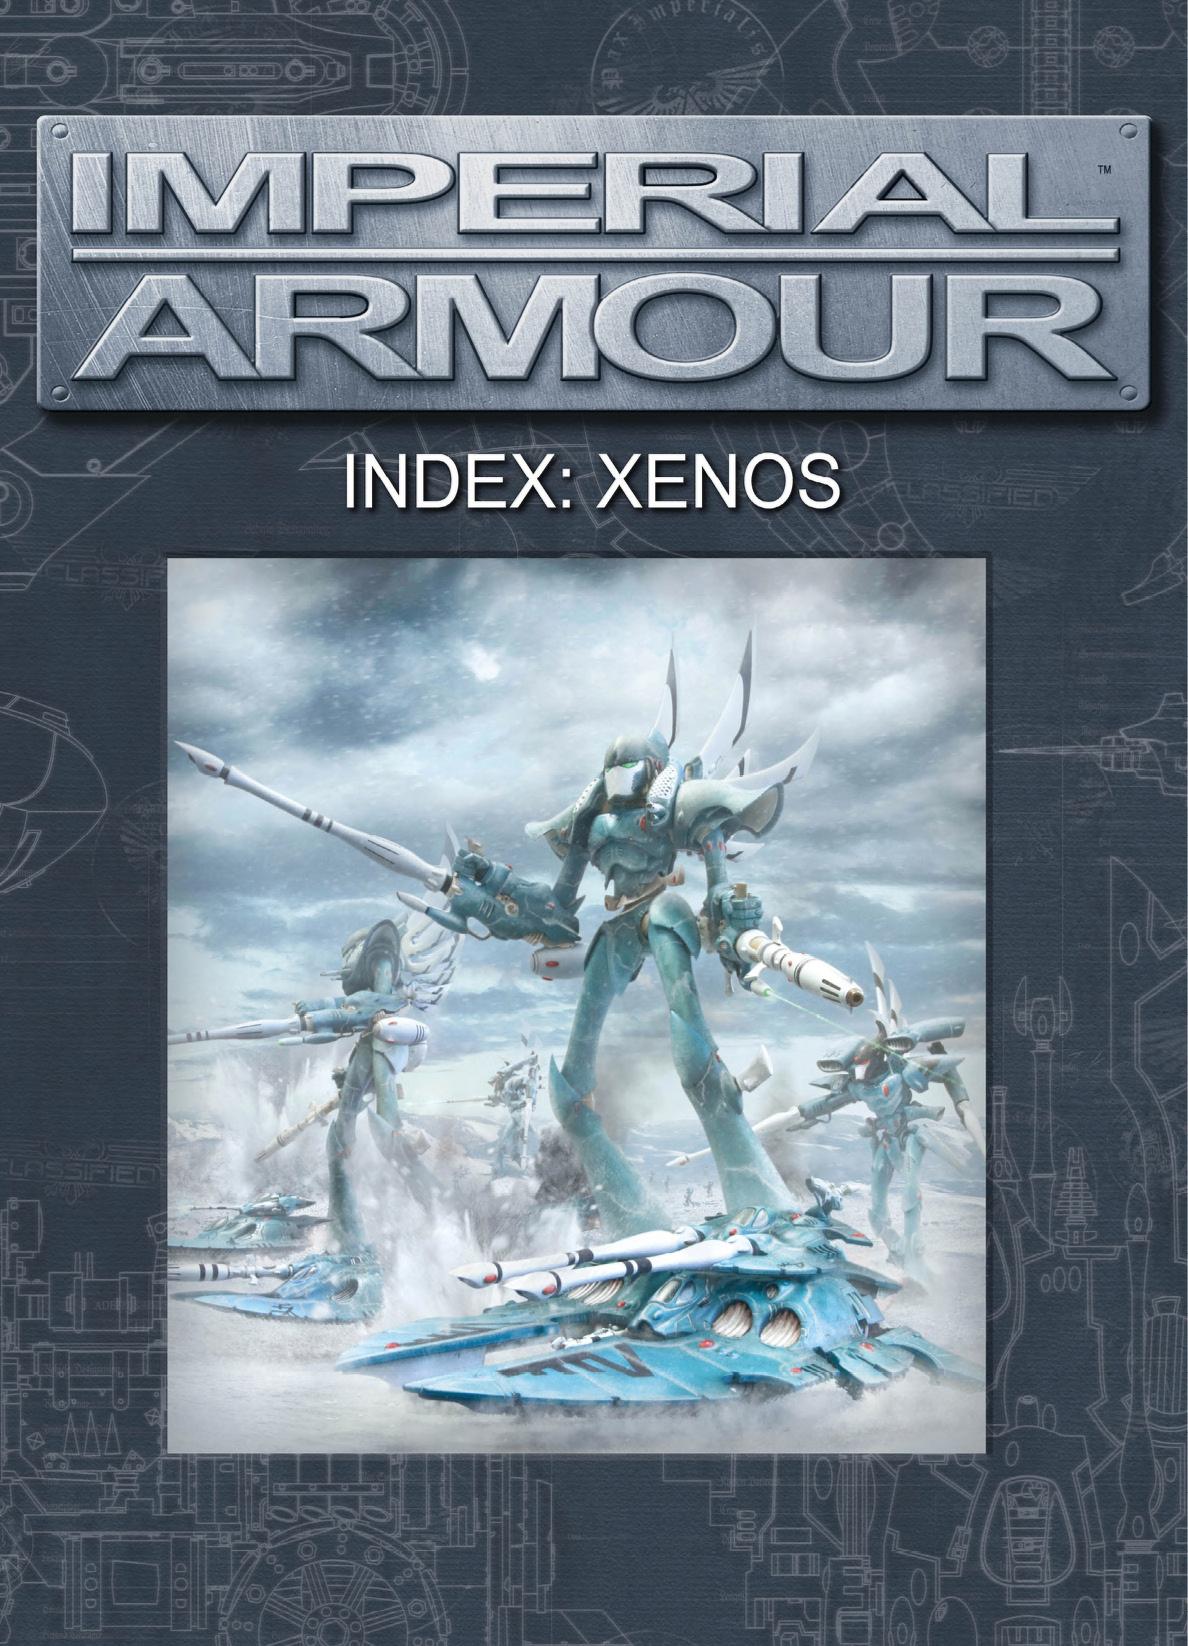 Imperial armour index xenos pdf download dot com secrets free pdf download